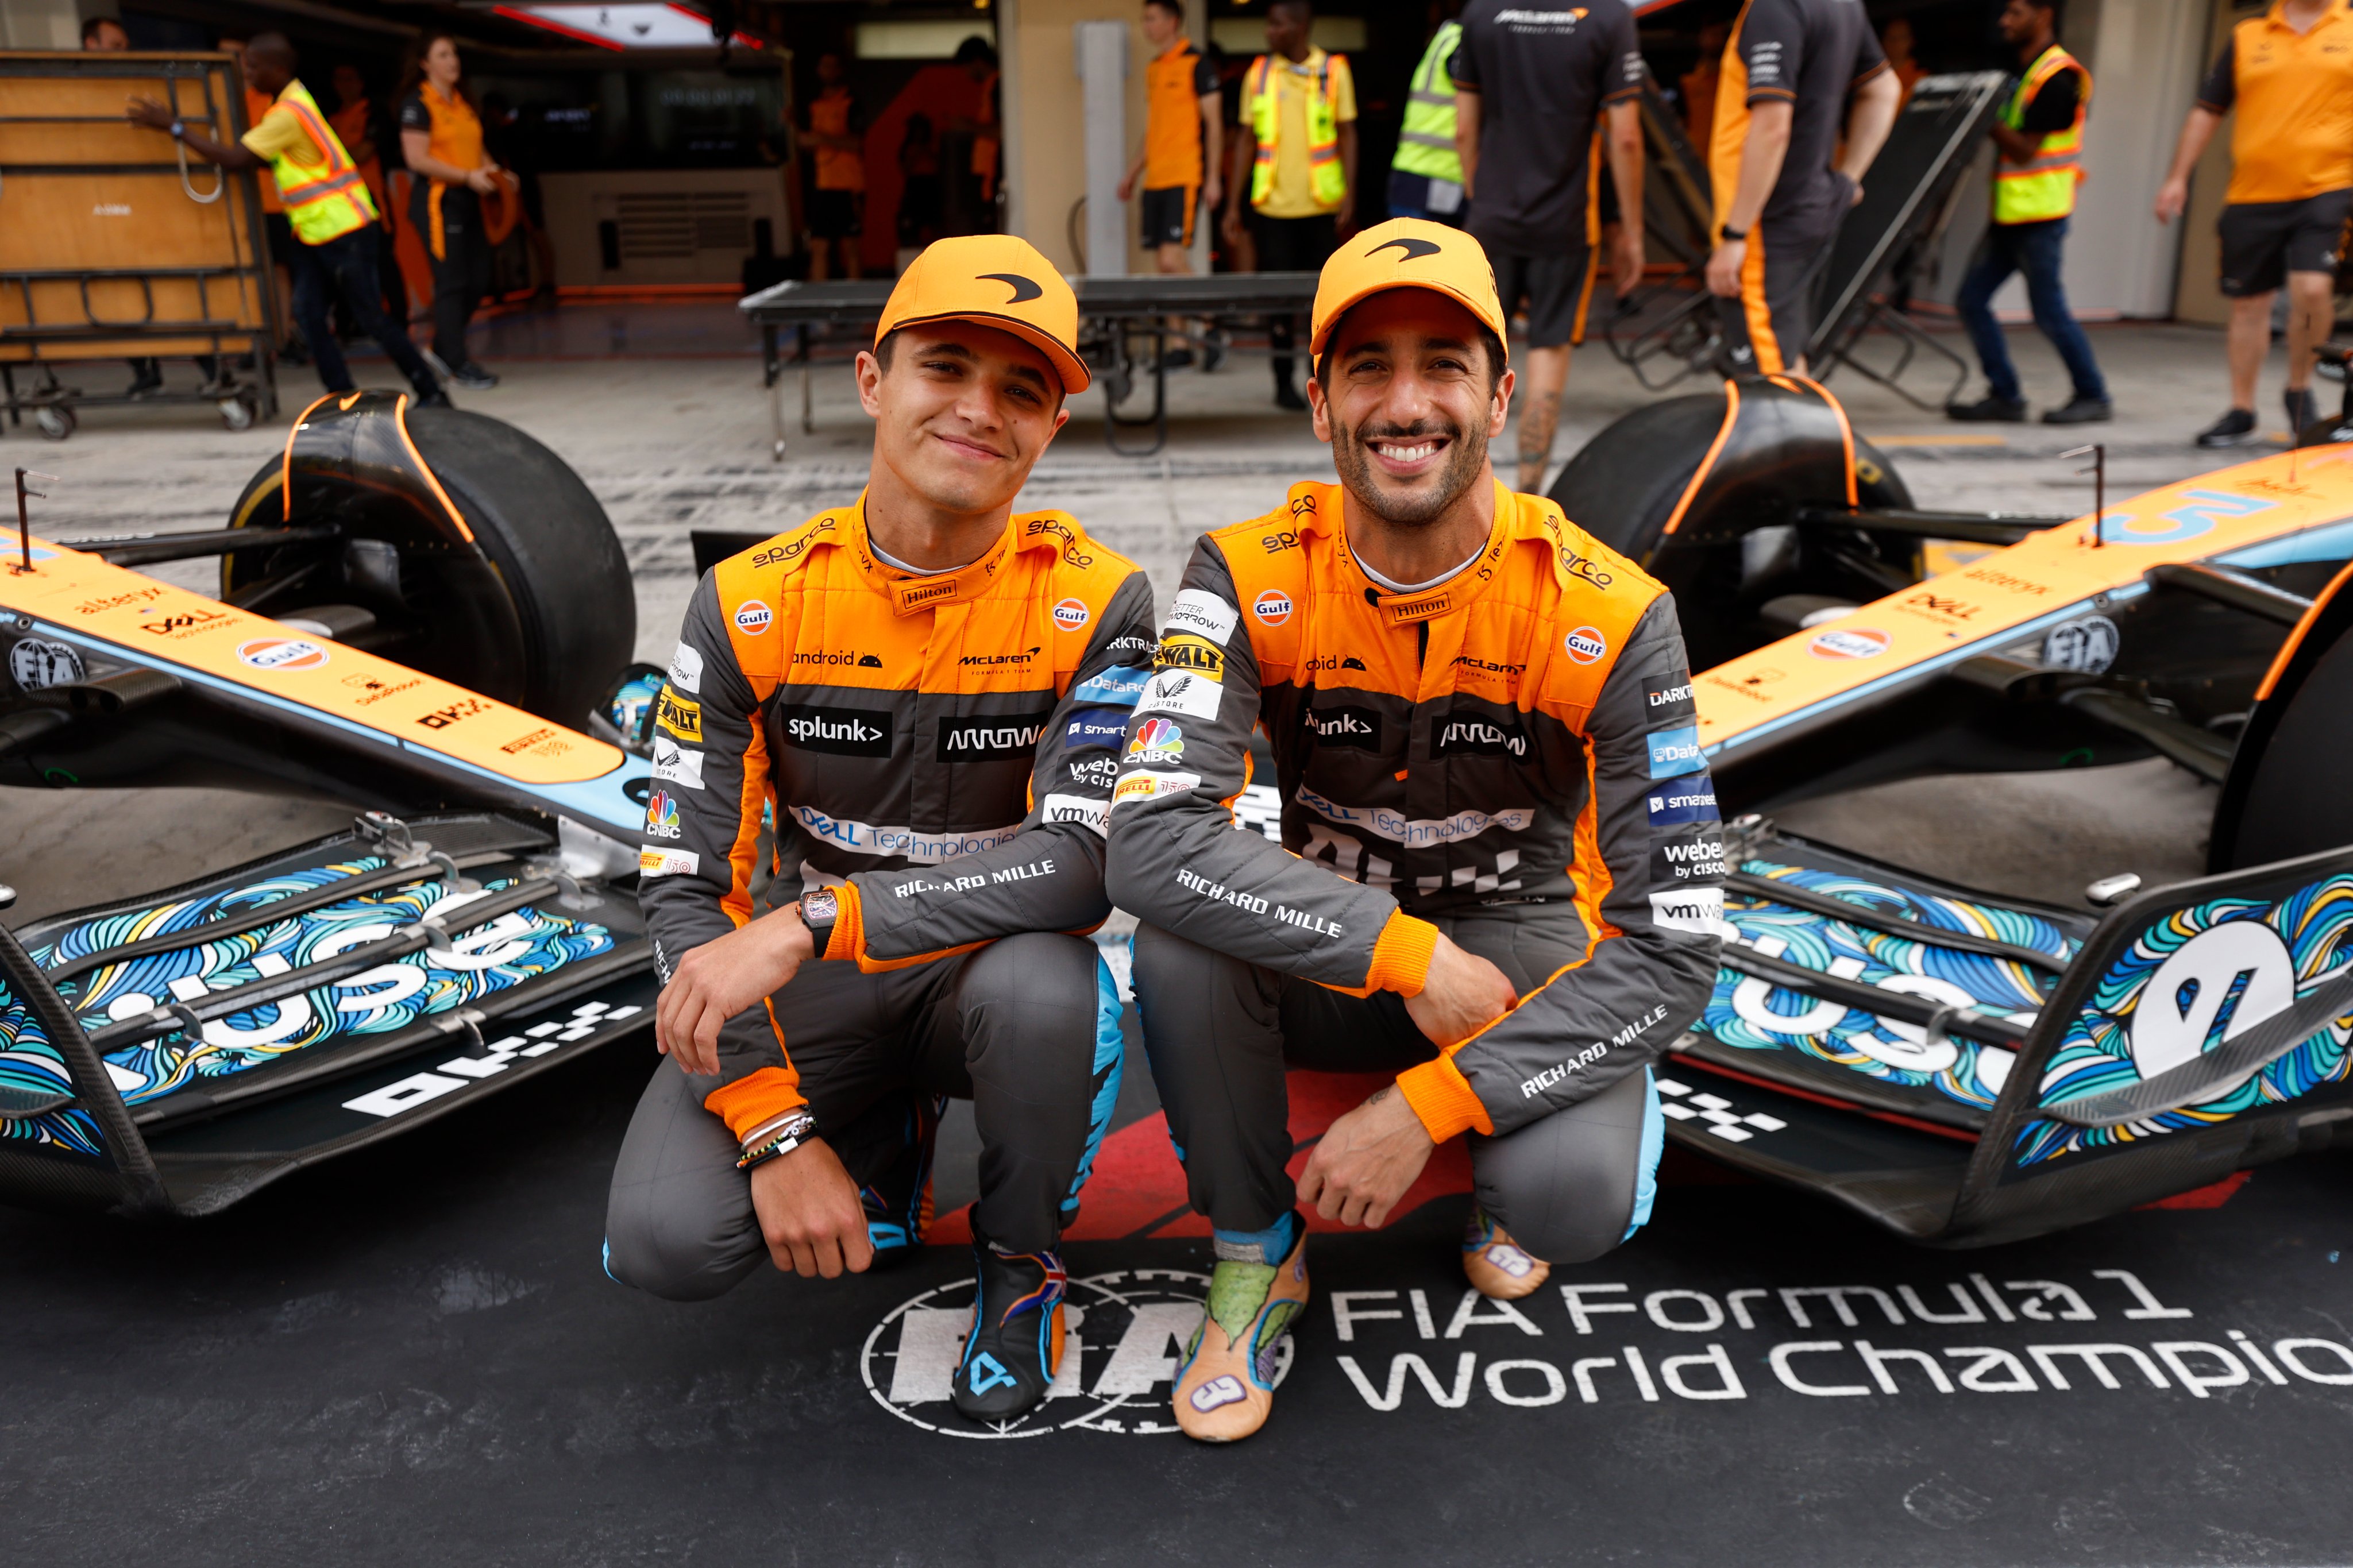 Lando Norris and Daniel Ricciardo served their second and final season as McLaren teammates